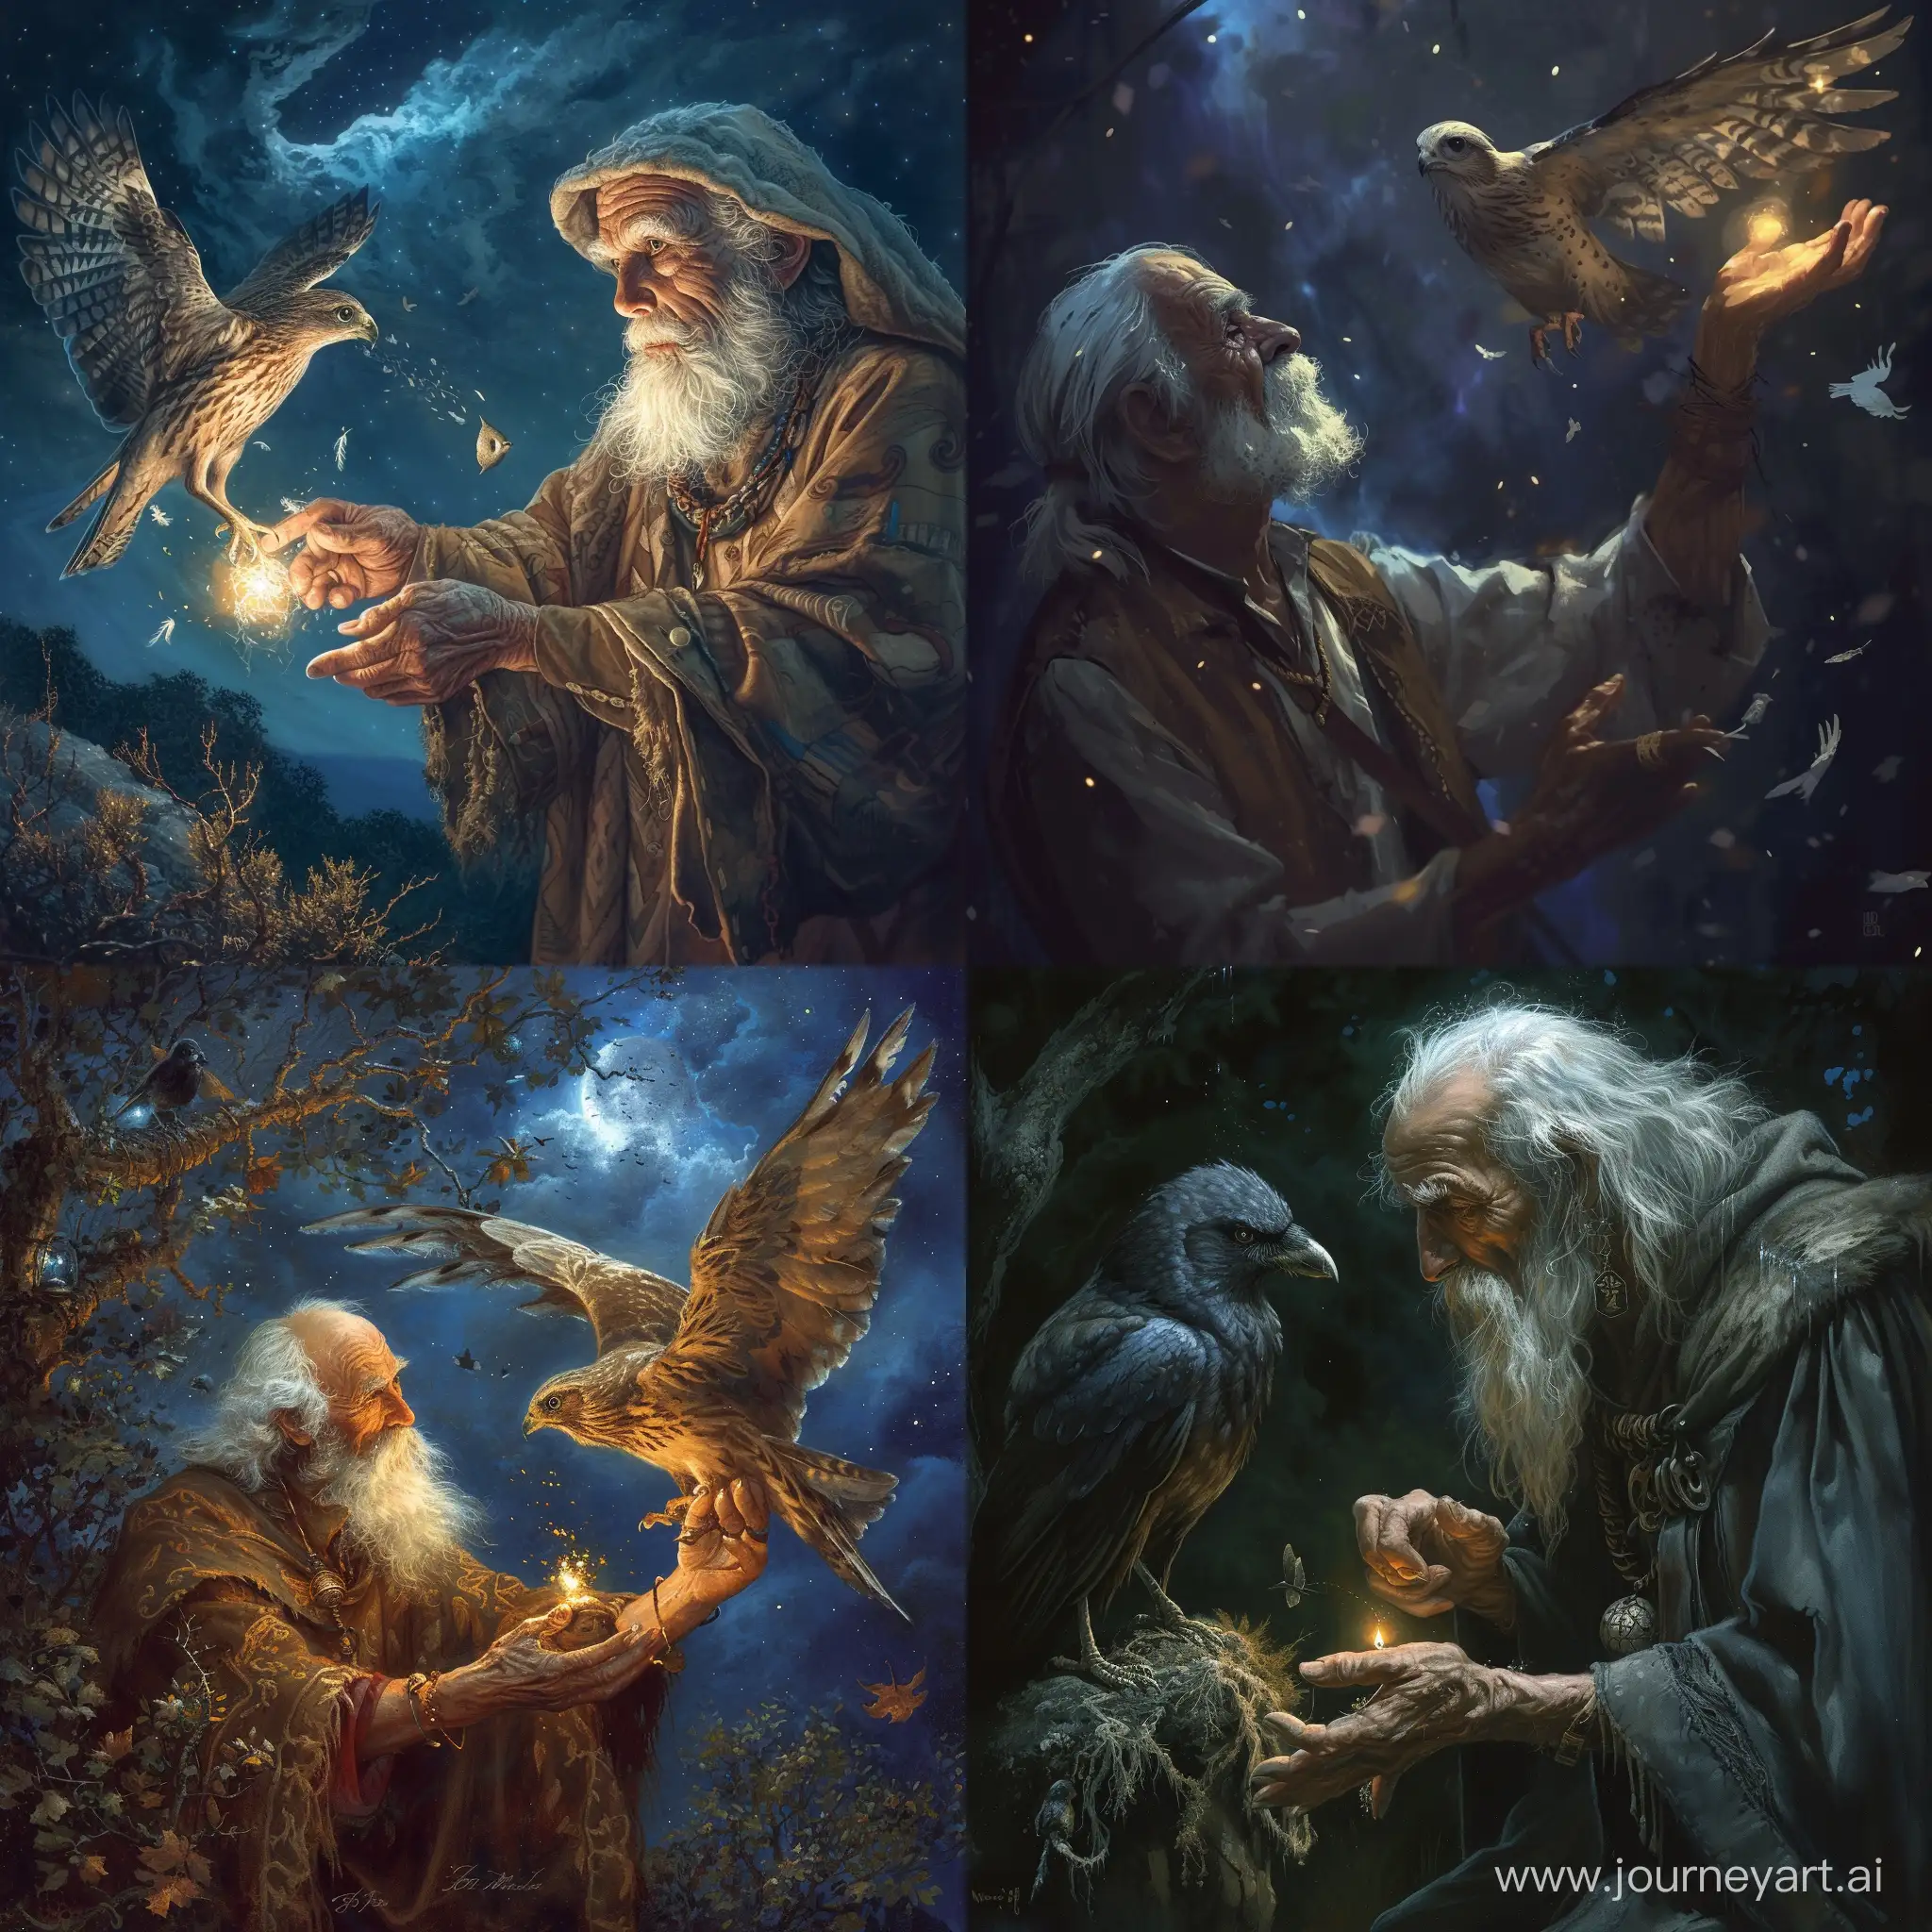 Mystical-Night-Encounter-Old-Man-and-Enchanted-Bird